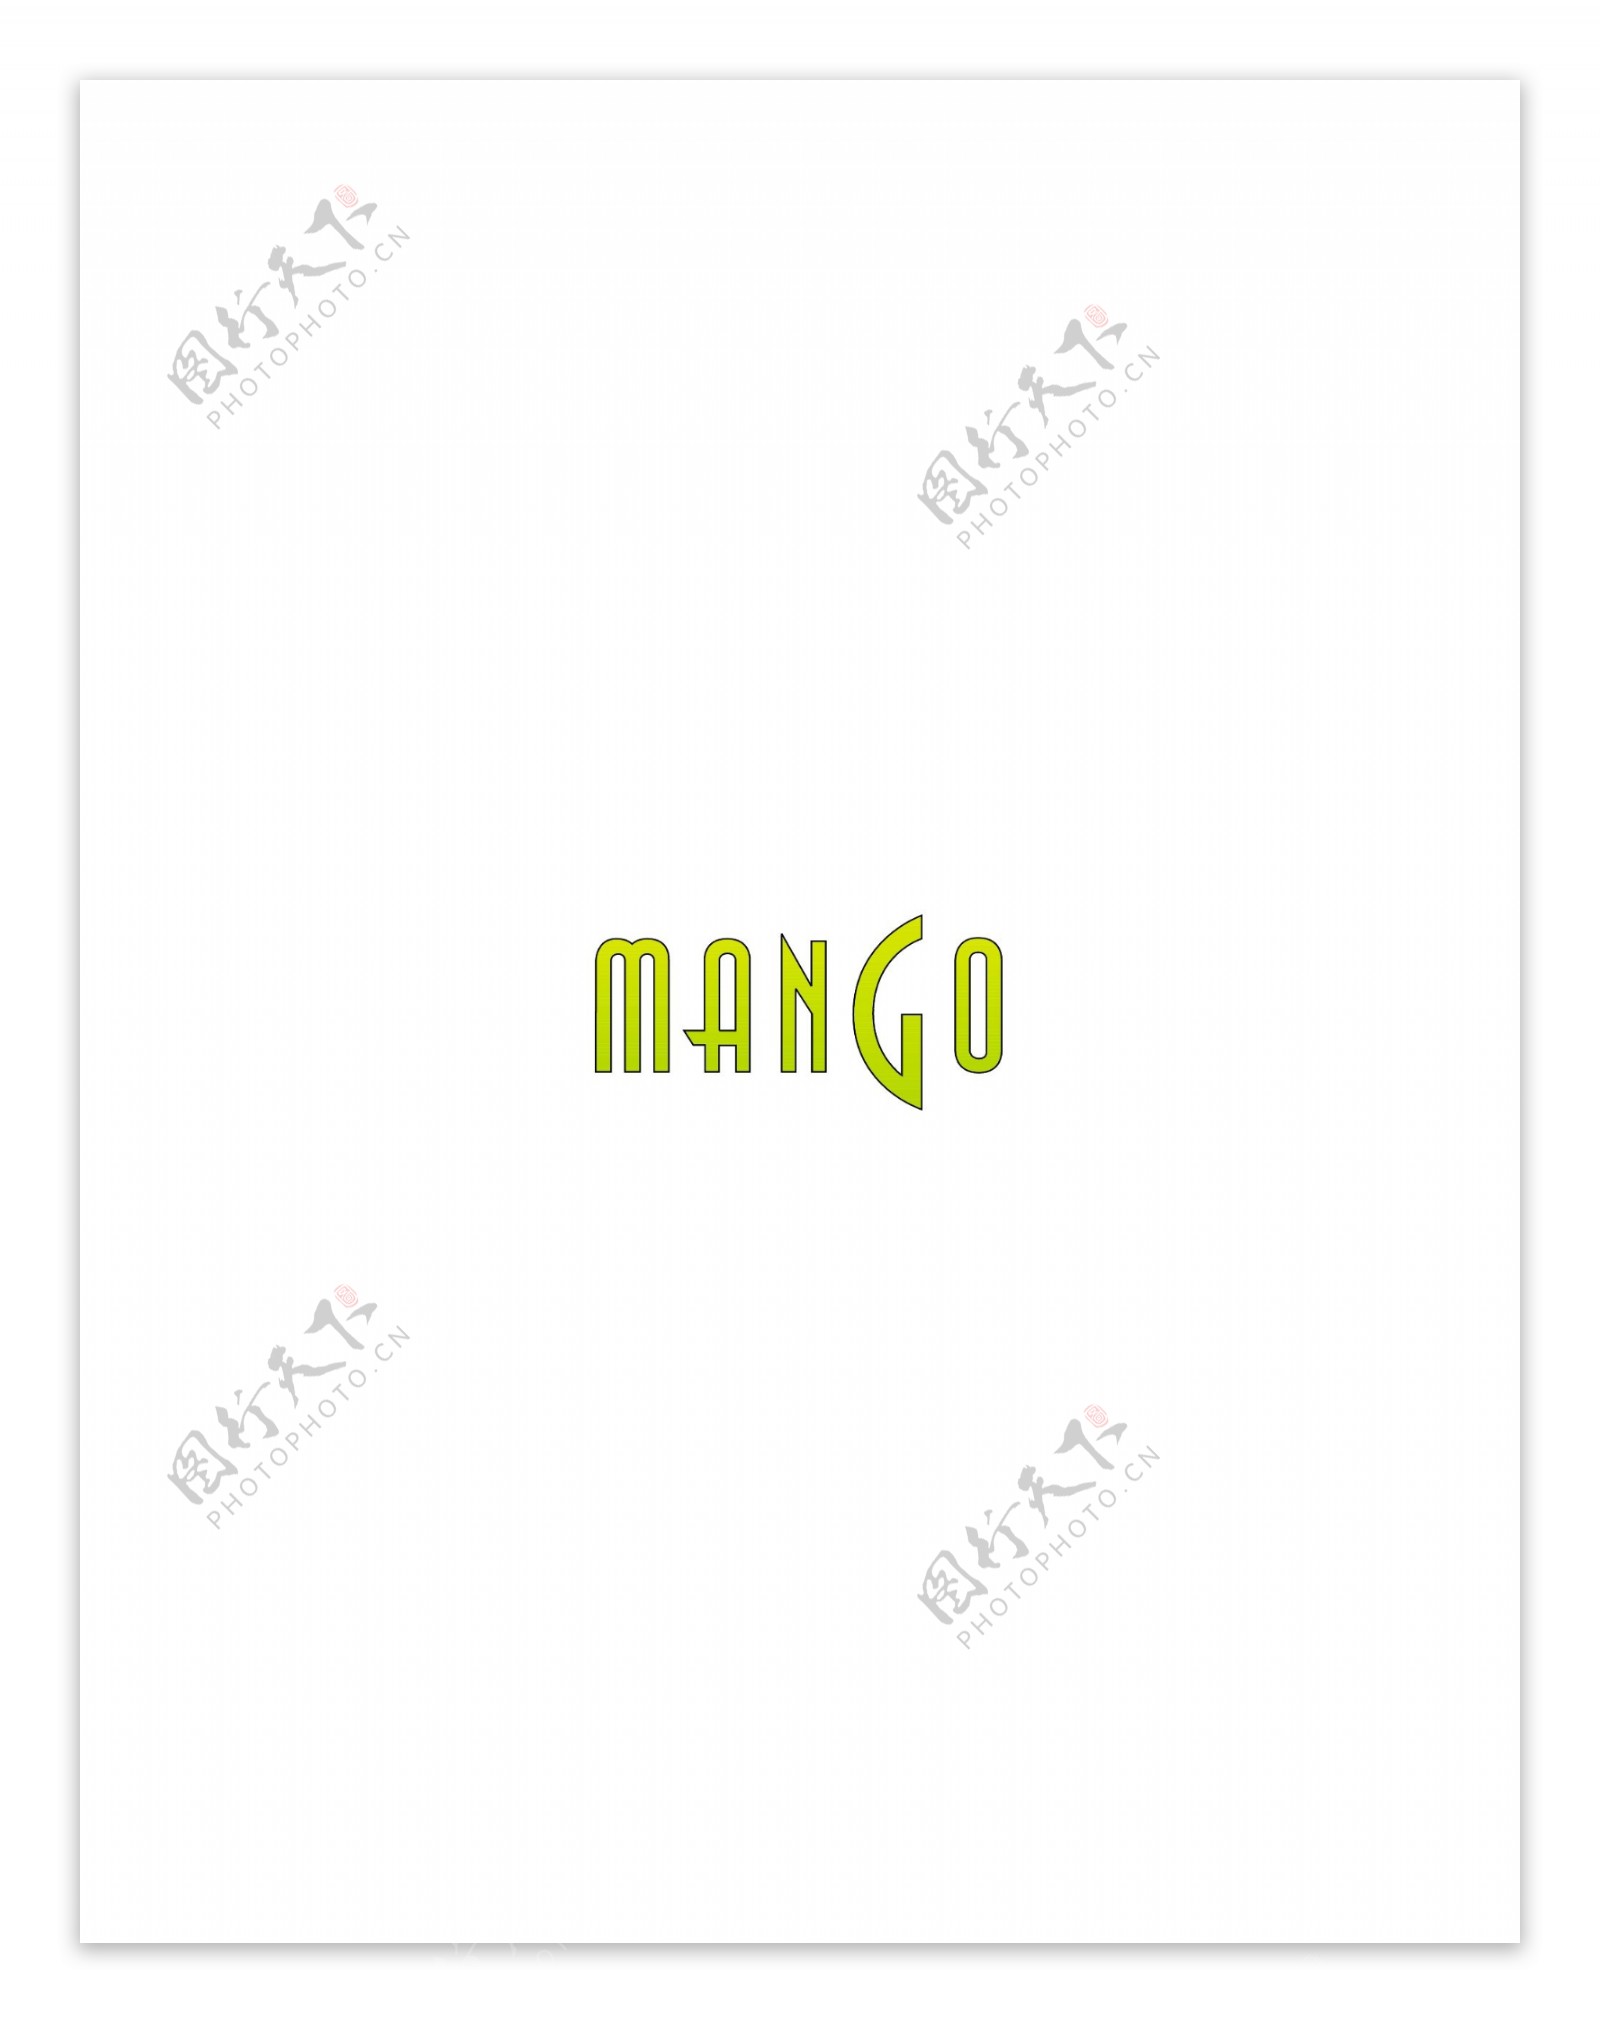 Mangologo设计欣赏IT公司标志案例Mango下载标志设计欣赏